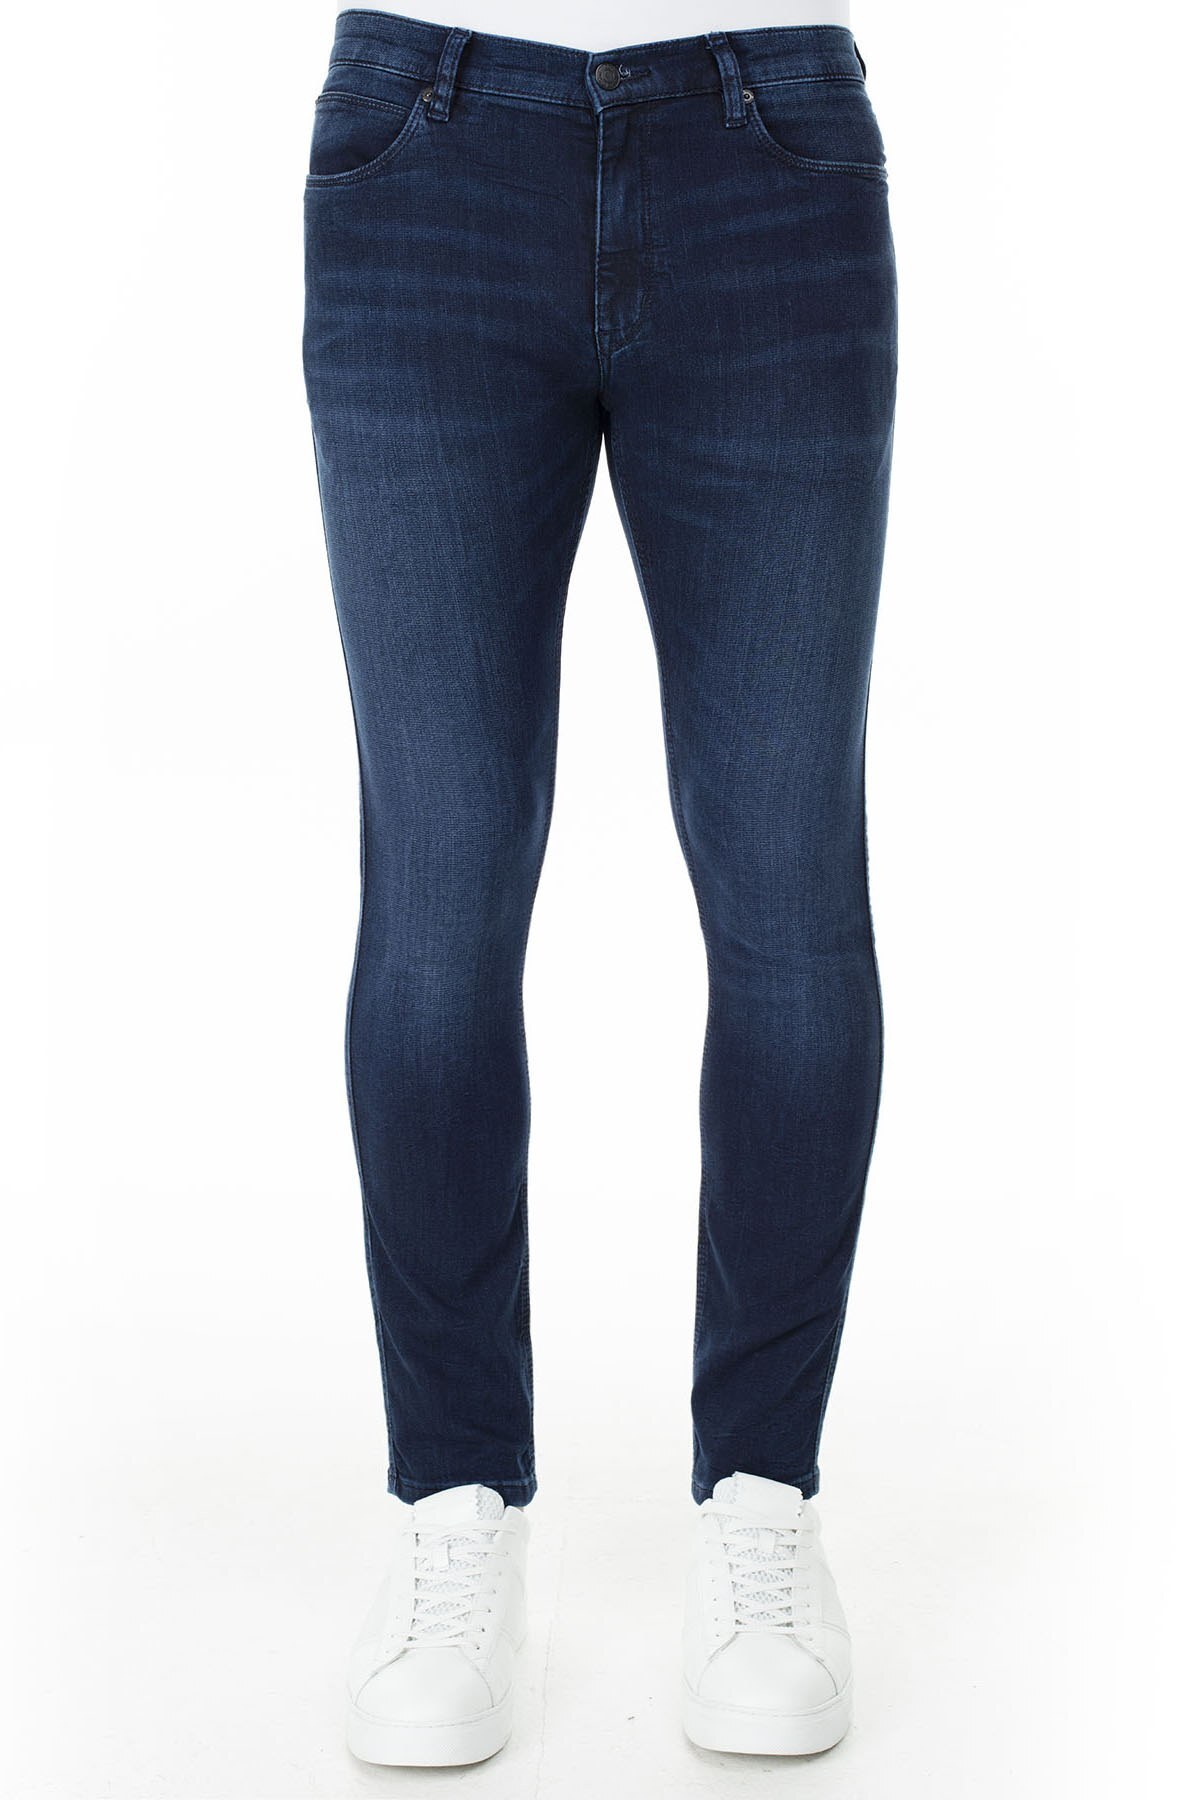 Hugo Boss Skinny Fit Jeans Erkek Kot Pantolon 50426677 408 LACİVERT